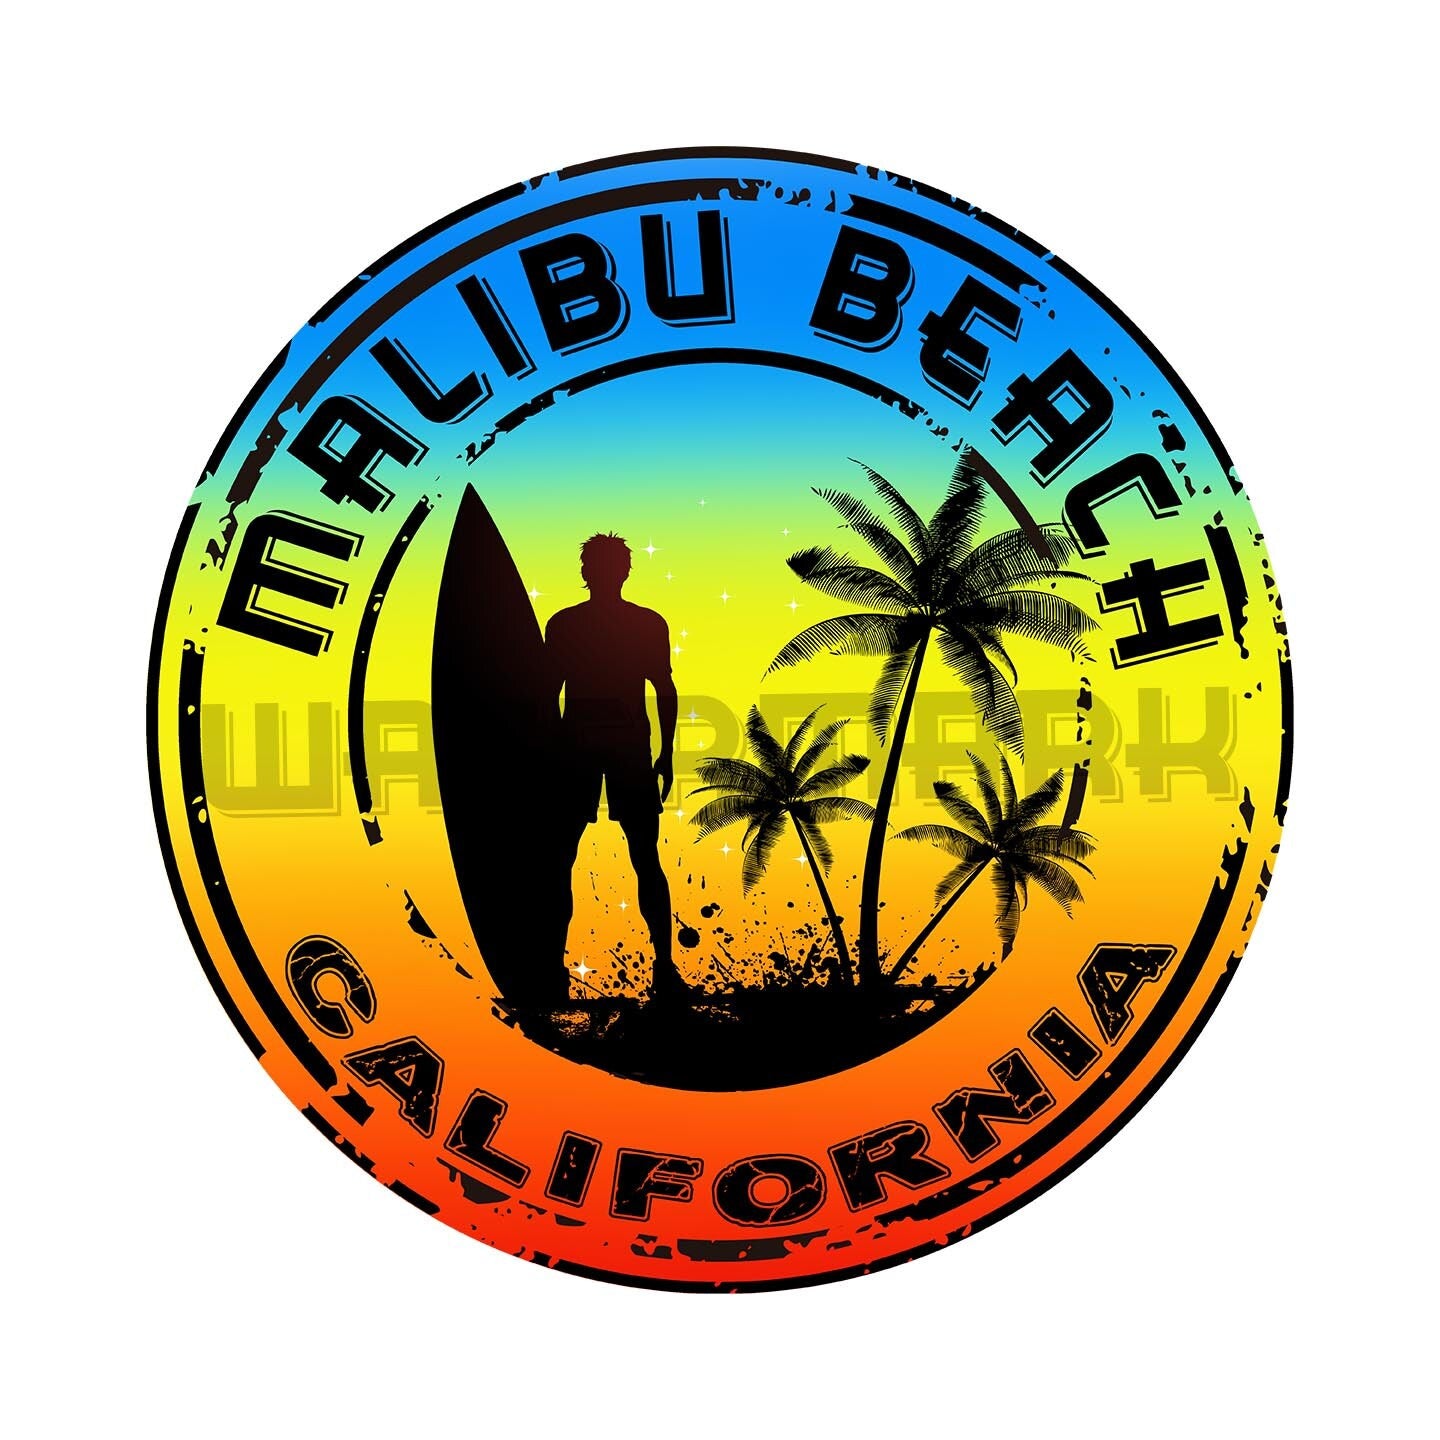 Malibu Beach California Surfing Surfer Waterslide Decal Sticker Transparent 4" x 4" Rainbow Surfboard Palm Trees Water Slide Hippie